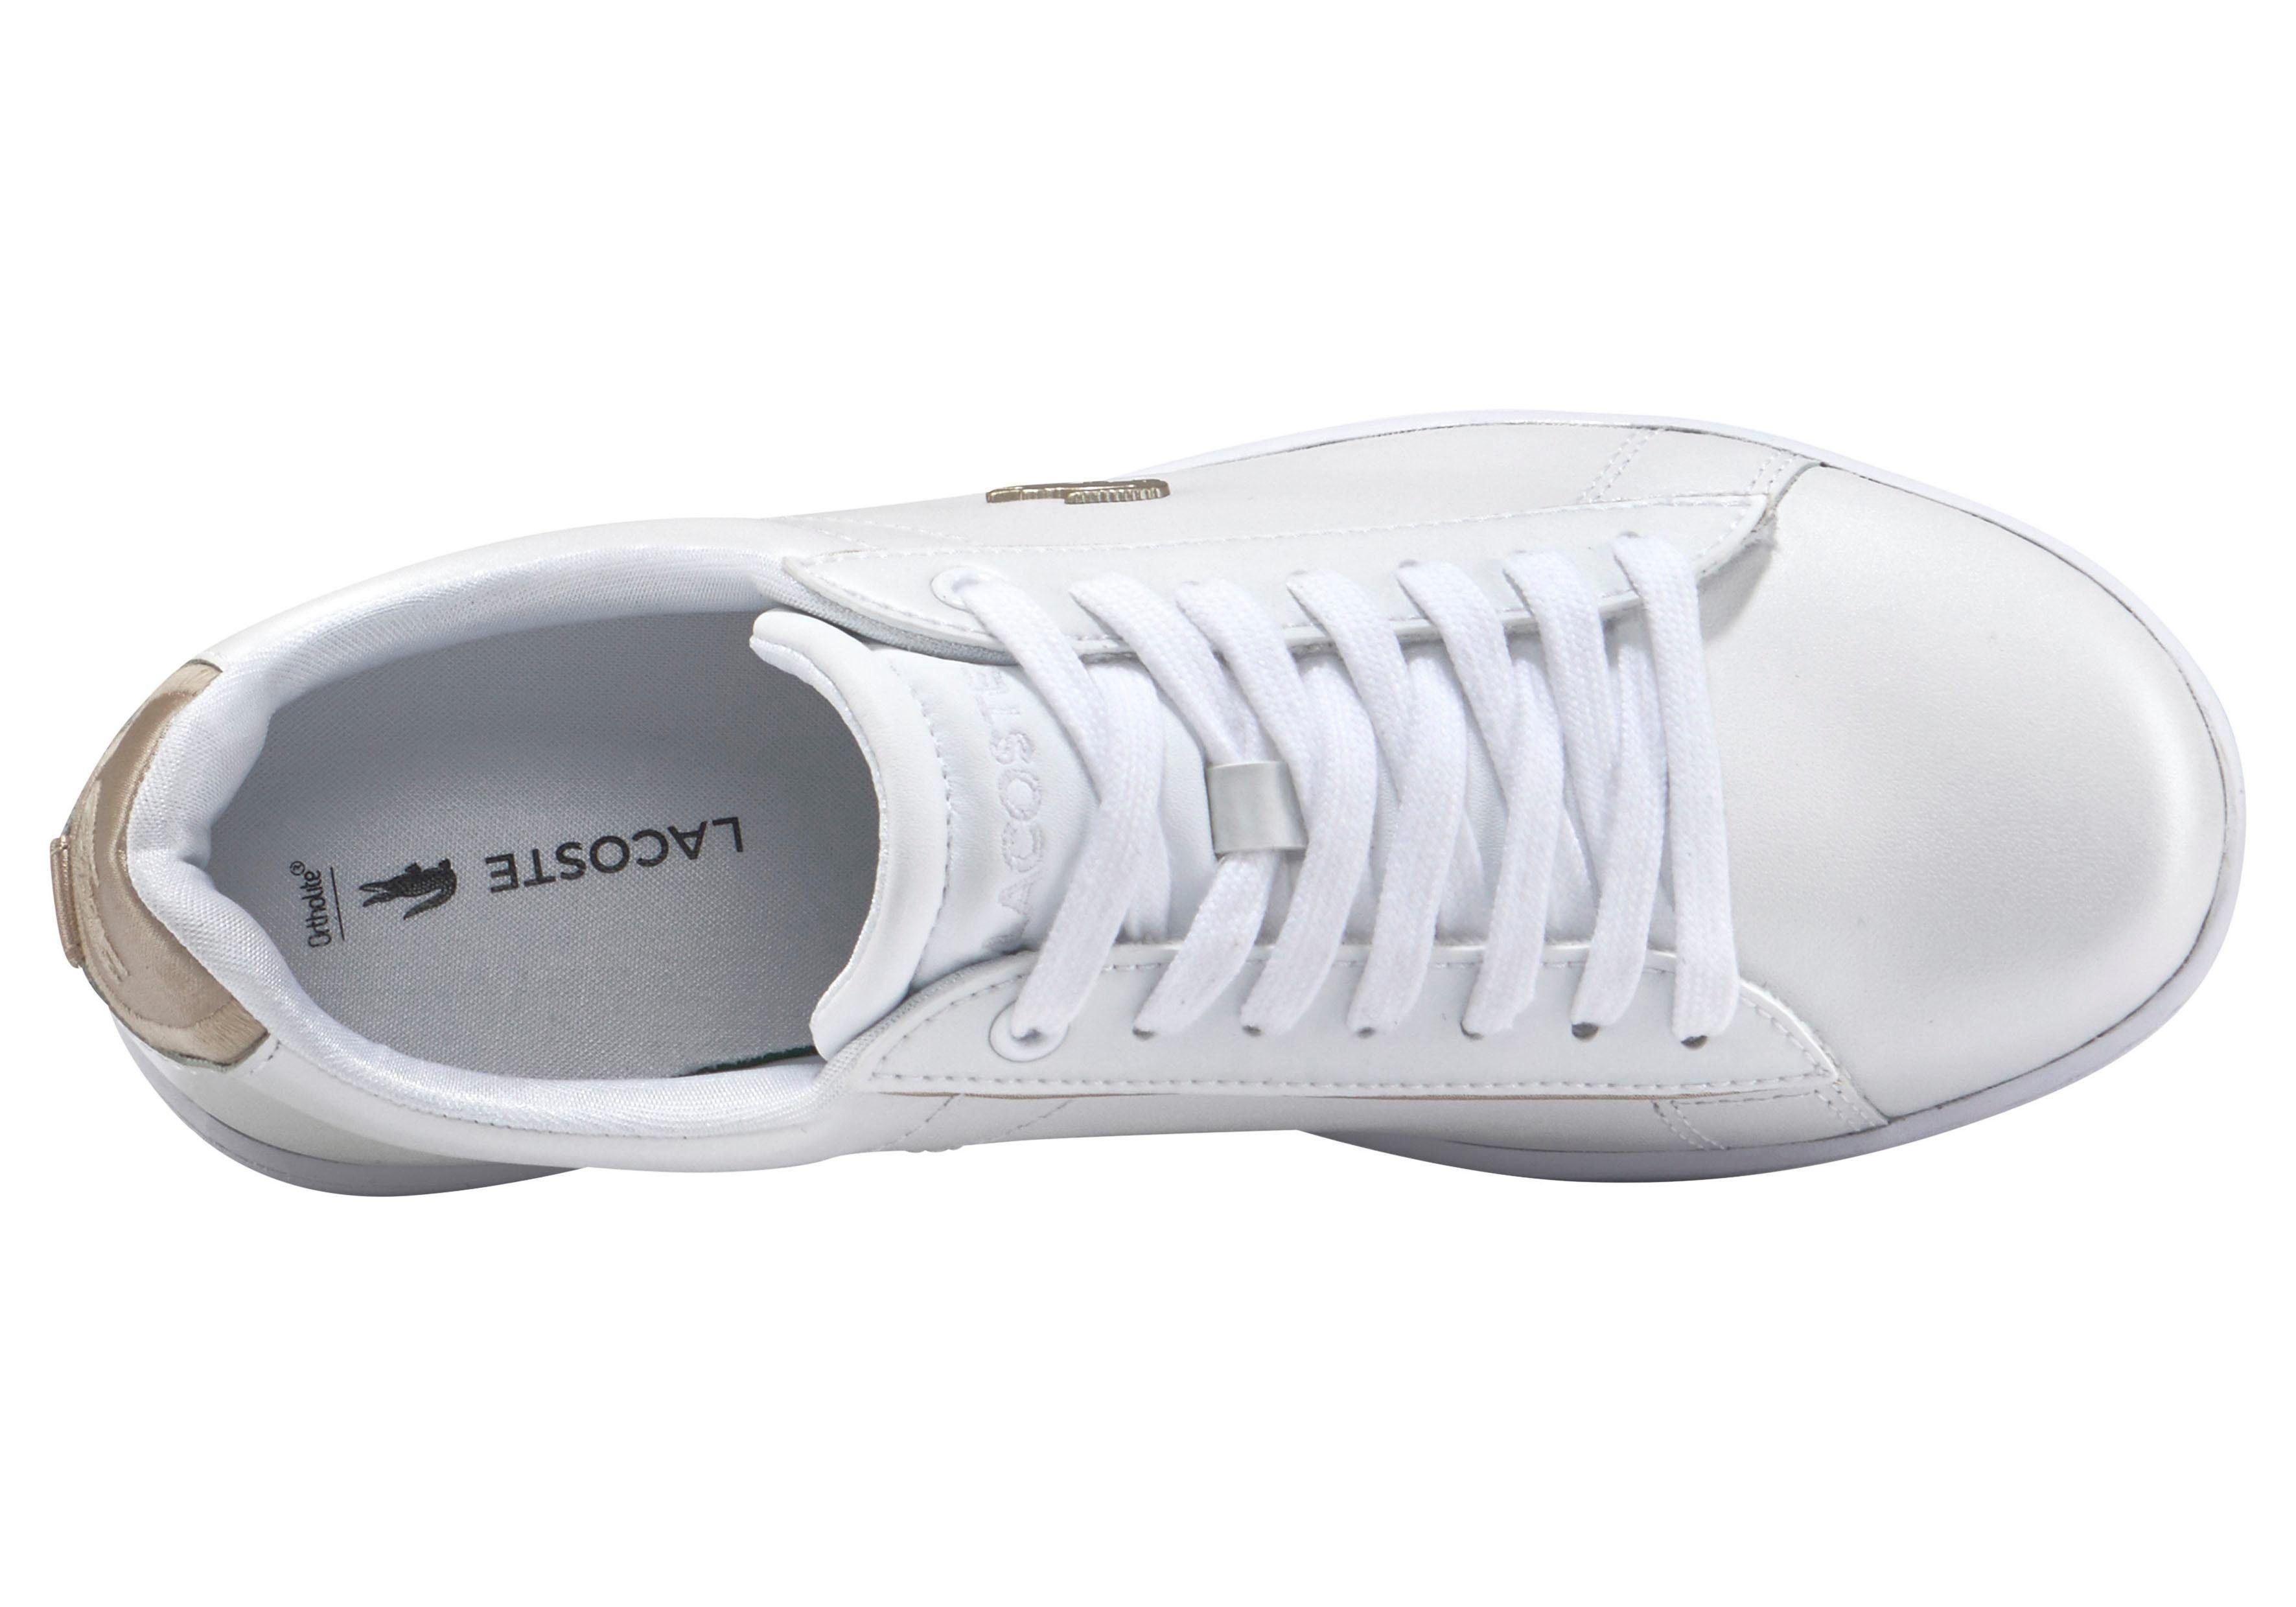 Lacoste Carnaby weiss hell 6 SPW 119 Sneaker Evo